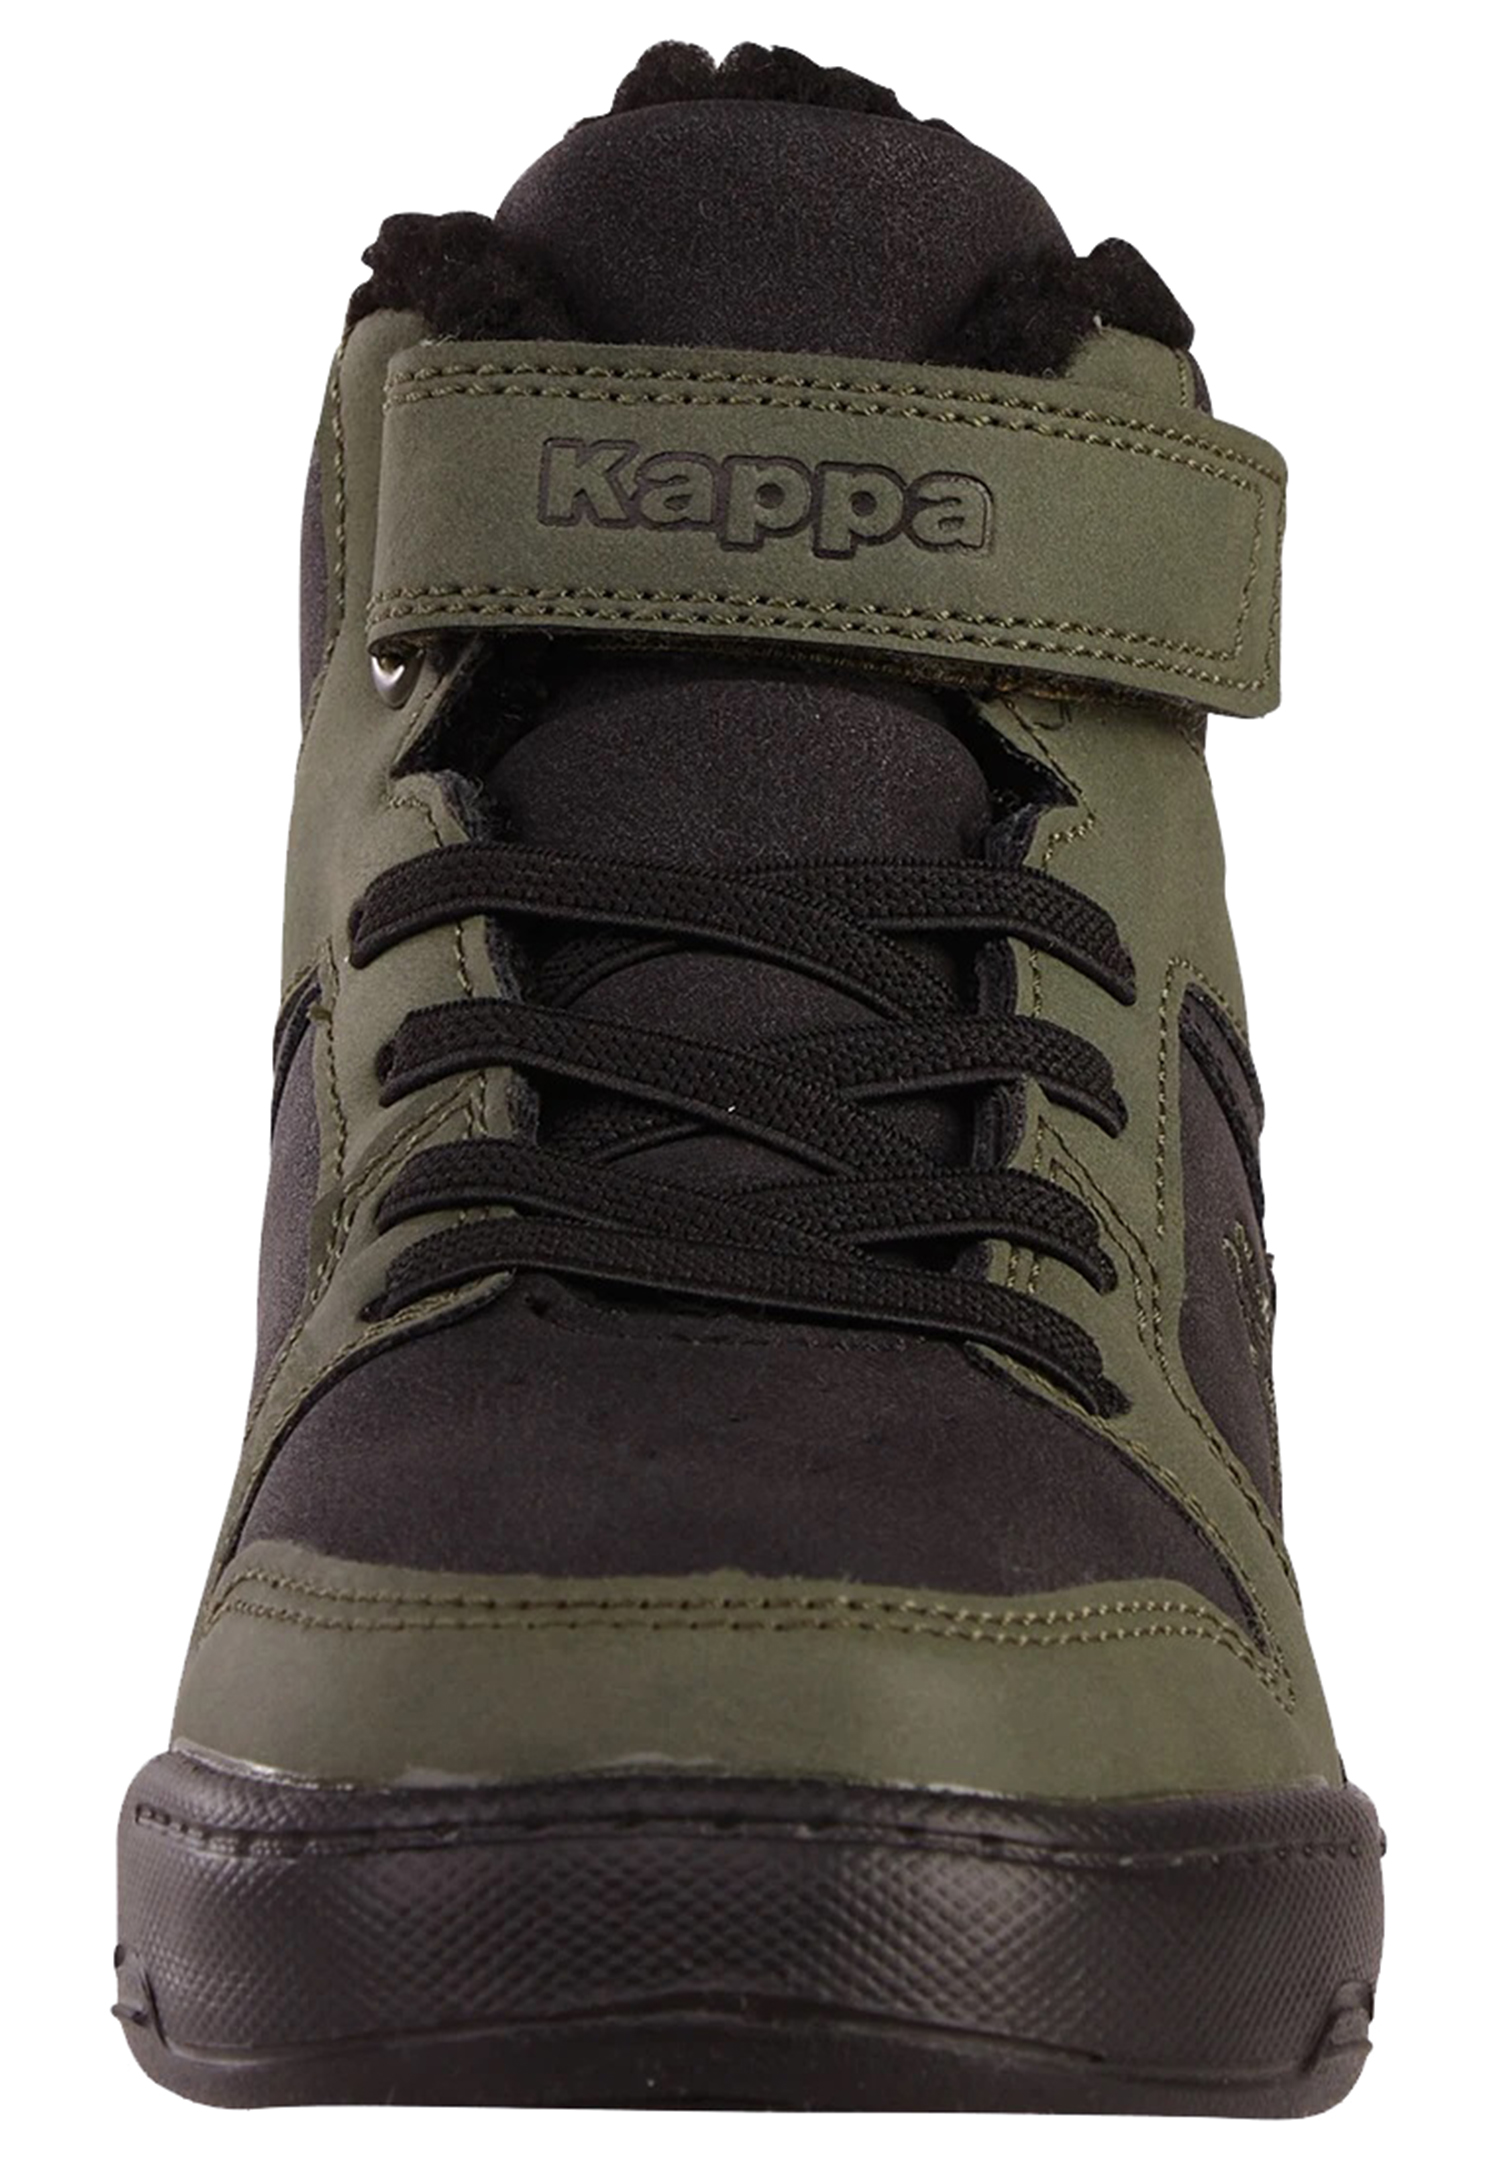 Kappa Unisex Kinder Sneaker High Top Stylecode 261071 3111 grün